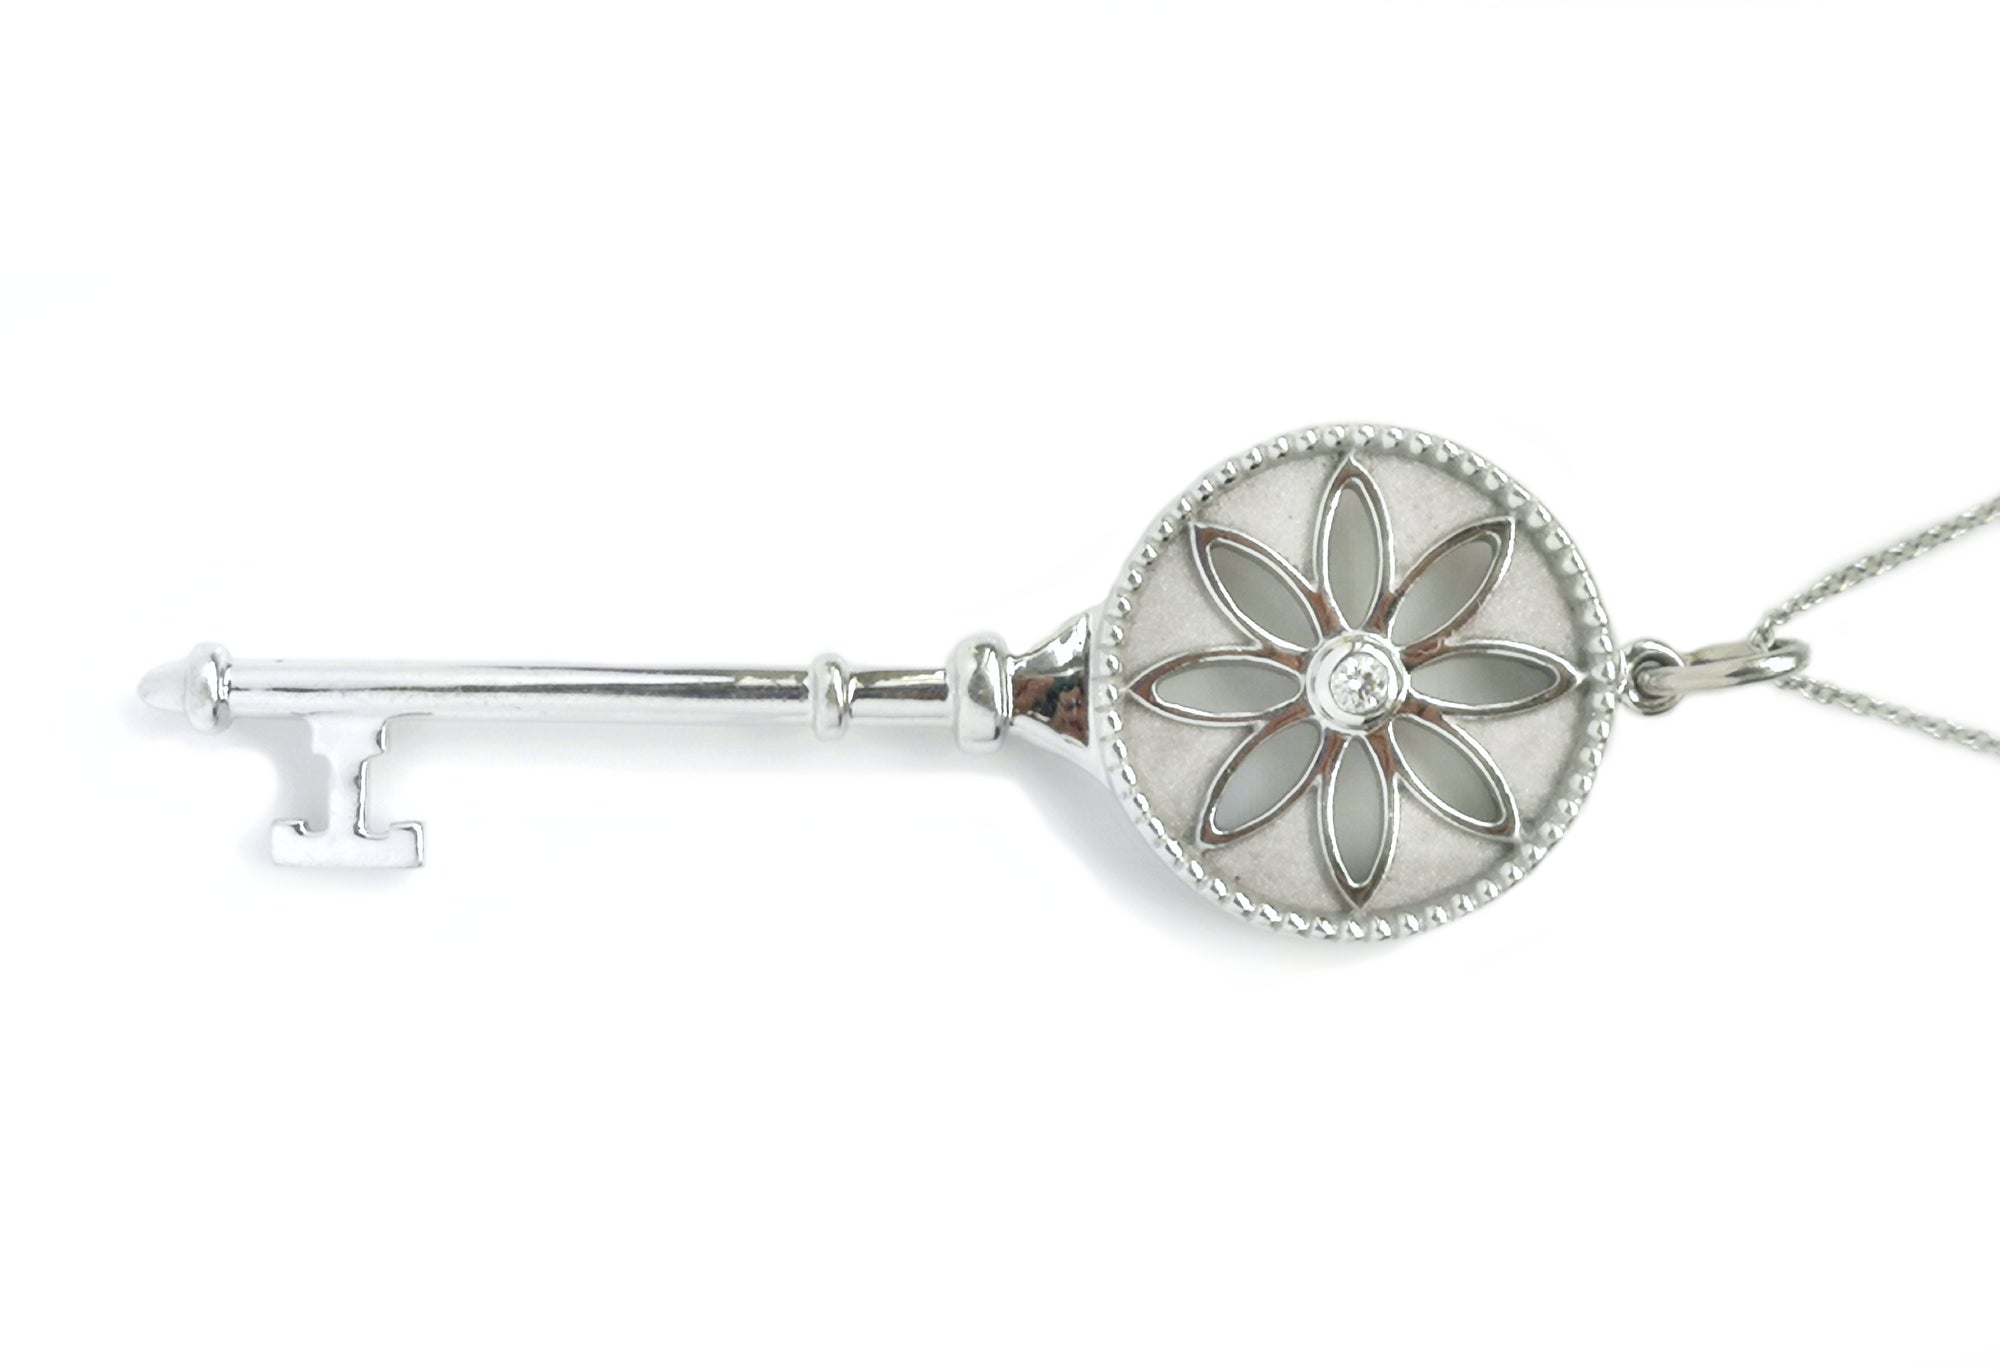 Tiffany & Co. Large Daisy Diamond Key Pendant in 18k White Gold